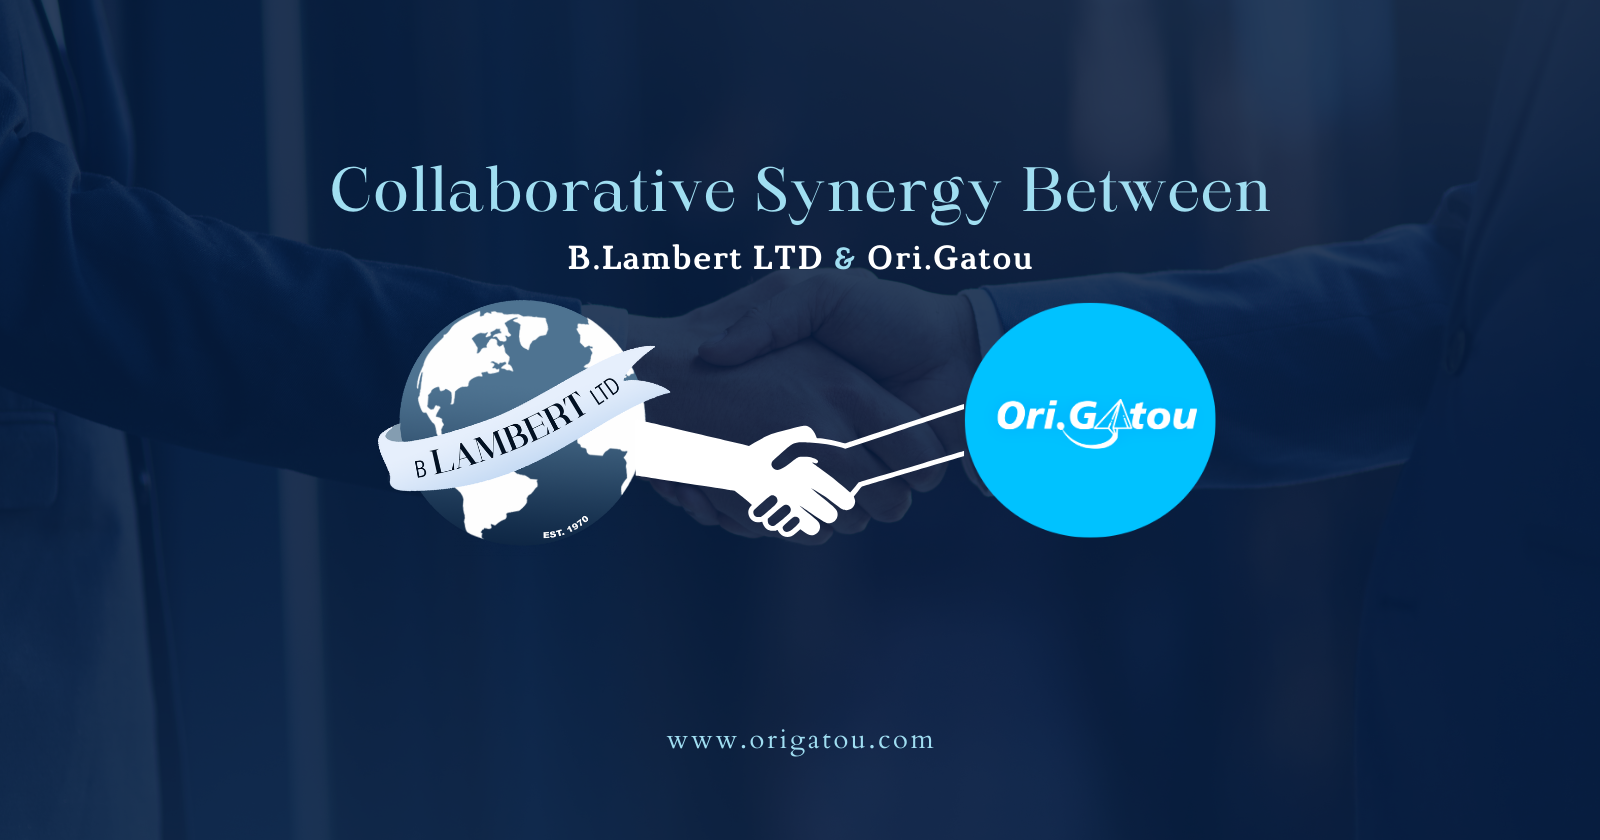 The Collaborative Synergy Between Ori.Gatou and B.Lambert Ltd cover image